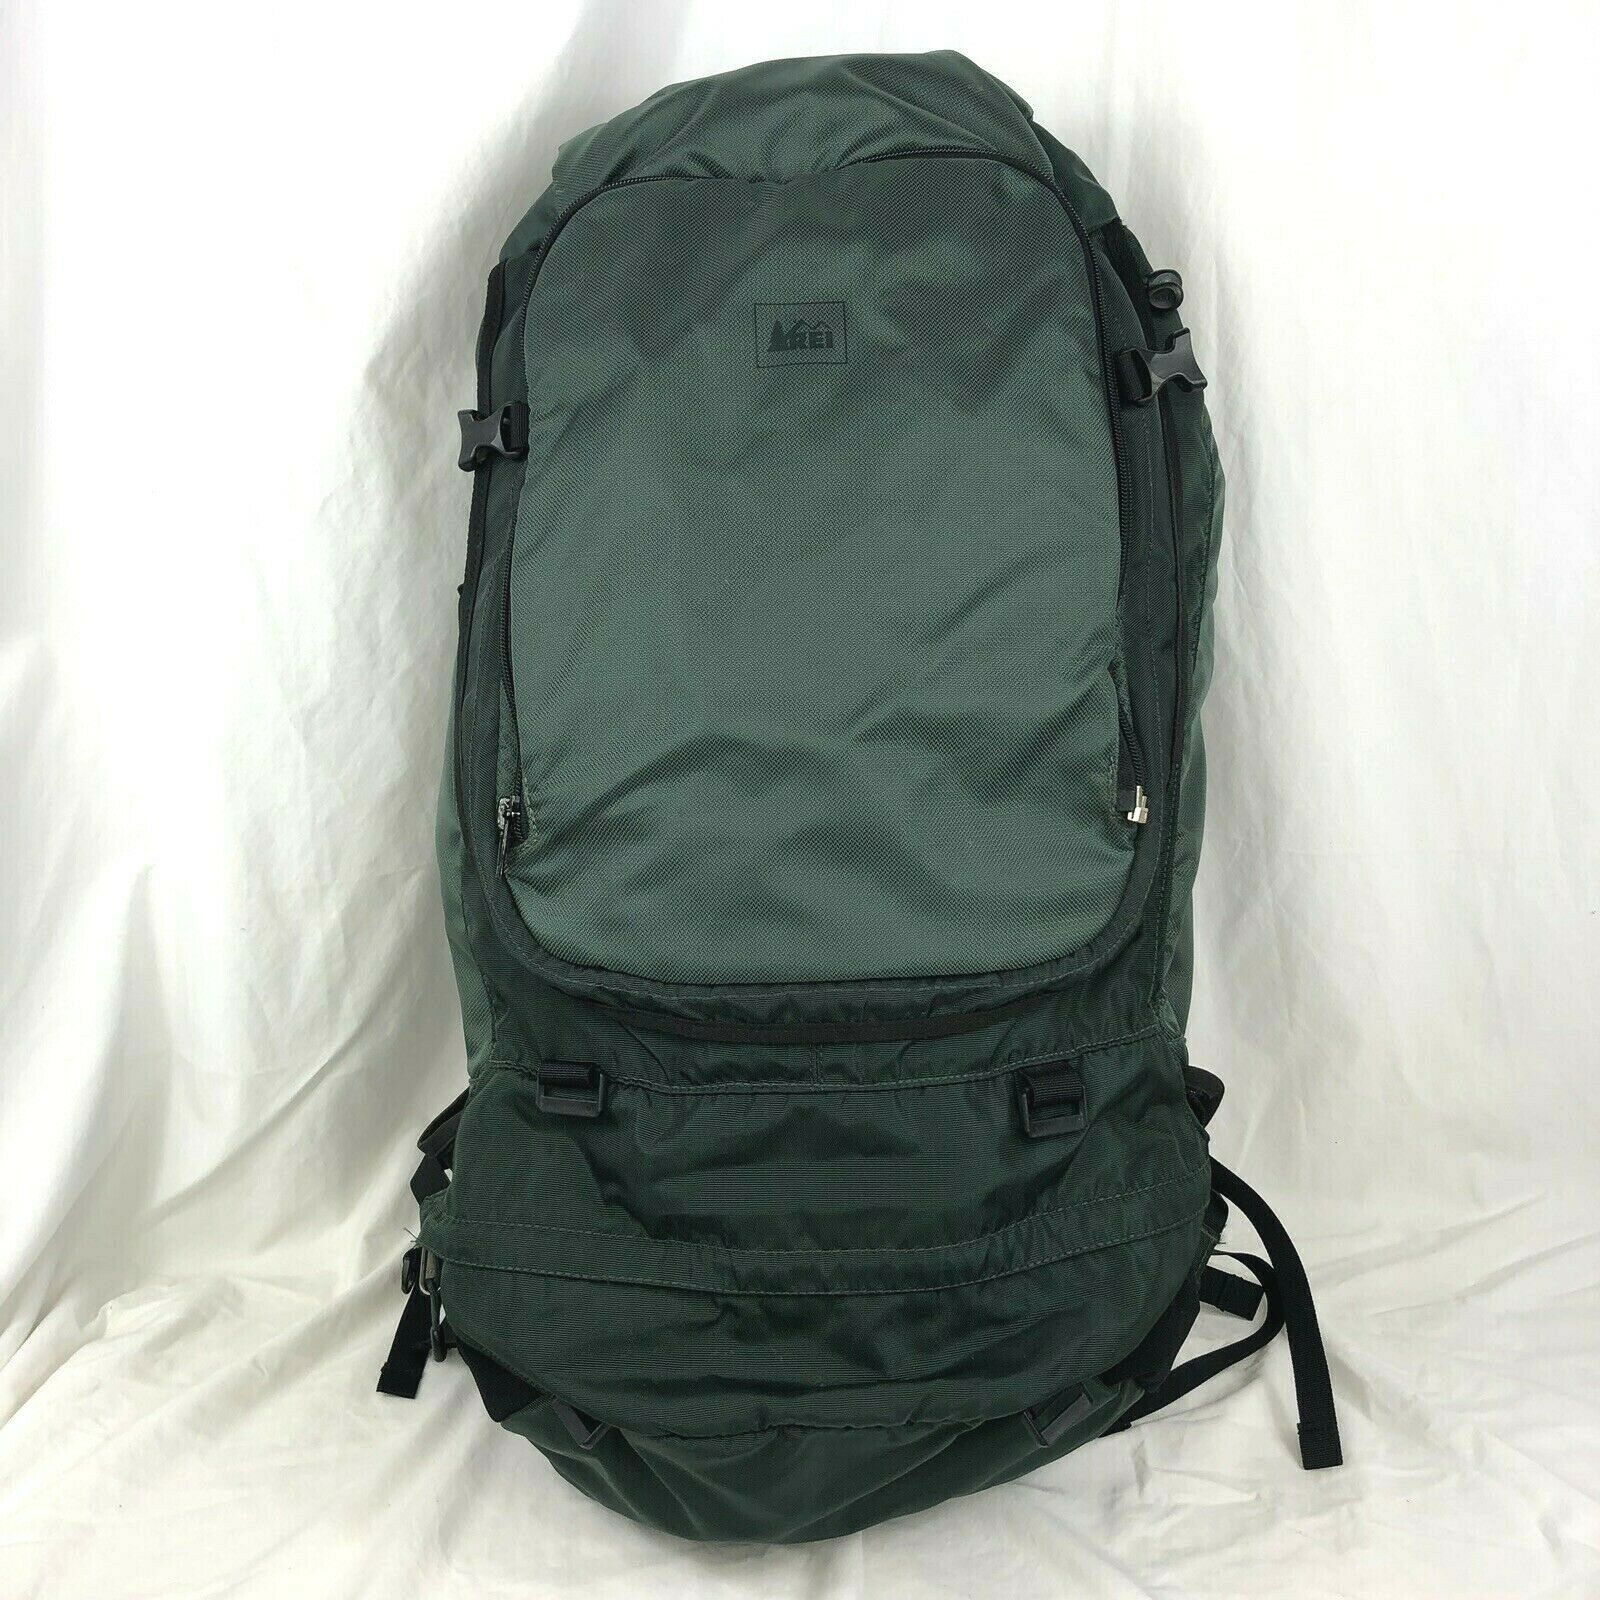 REI Co-op Internal Frame Hiking Backpack Grand Tour Bag Green Black 66.5 L